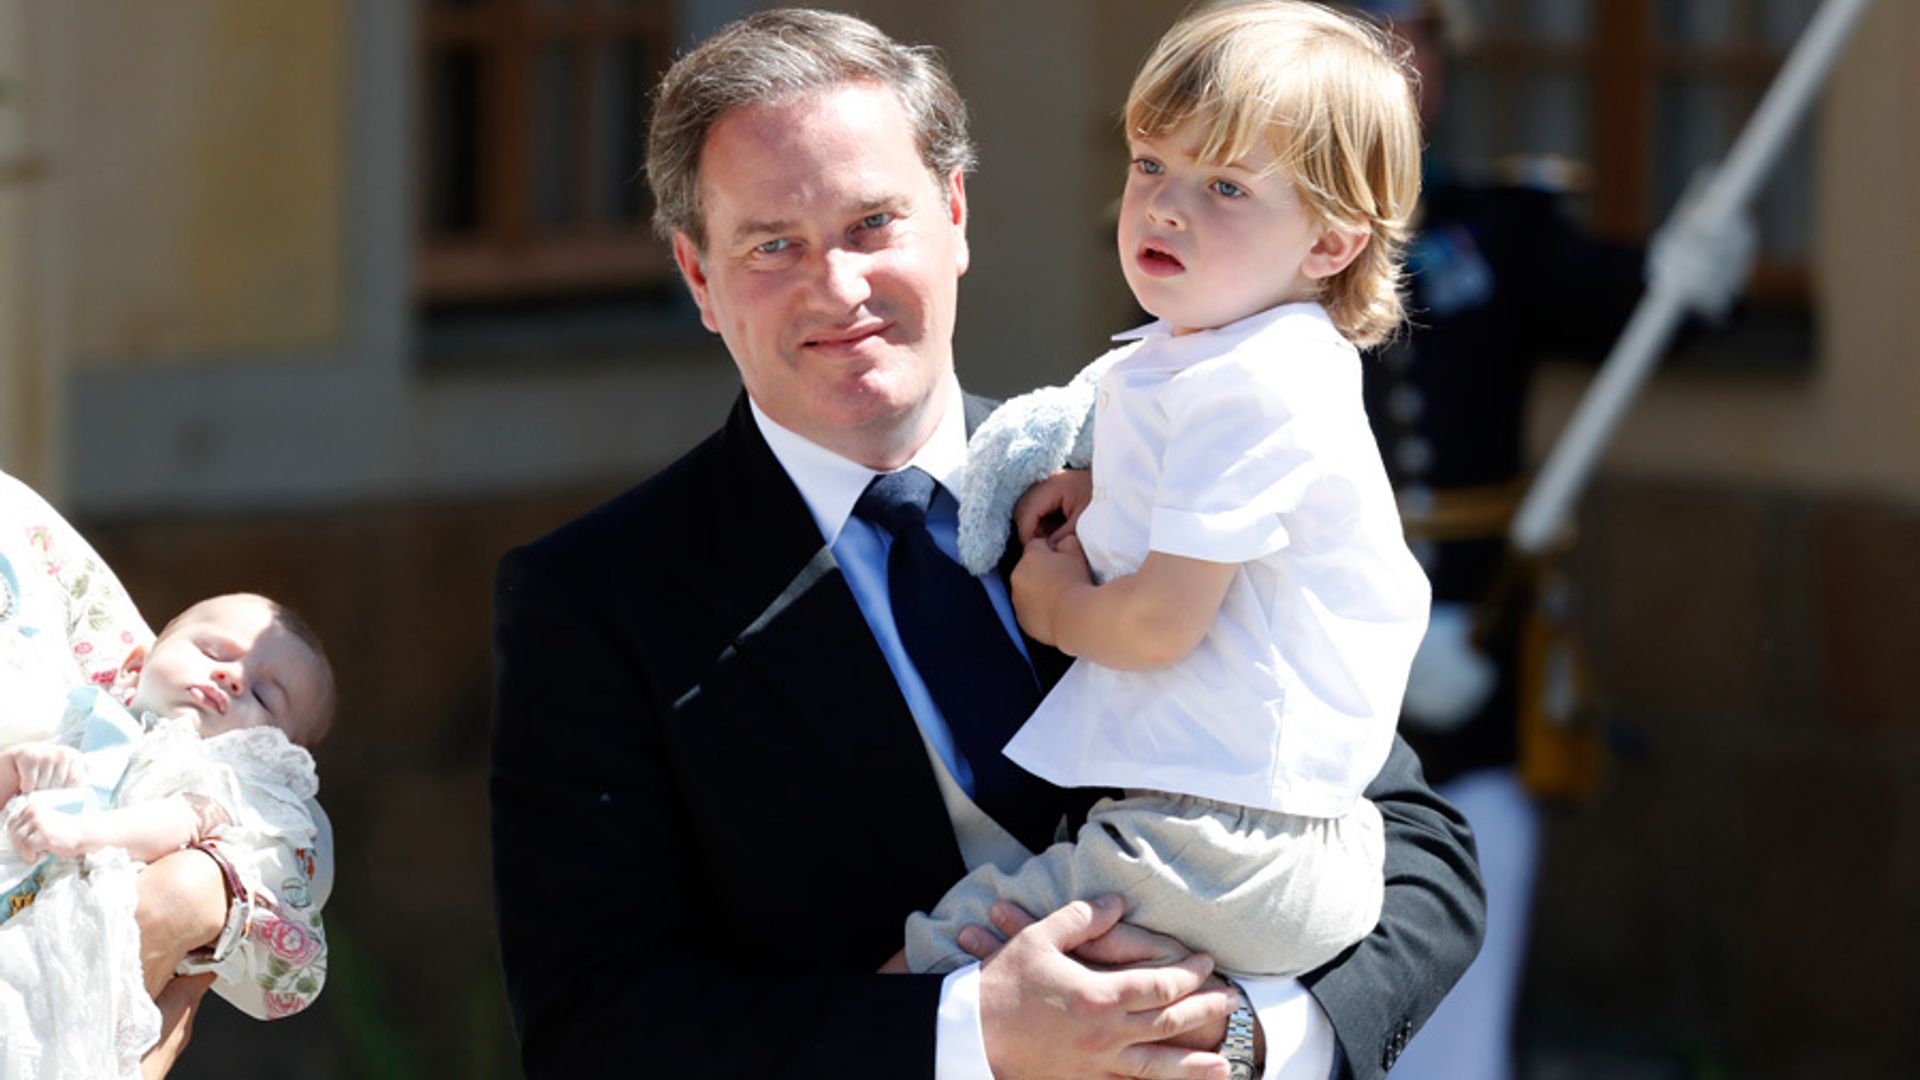 Prince Nicolas of Sweden: The little royal's most adorable photos